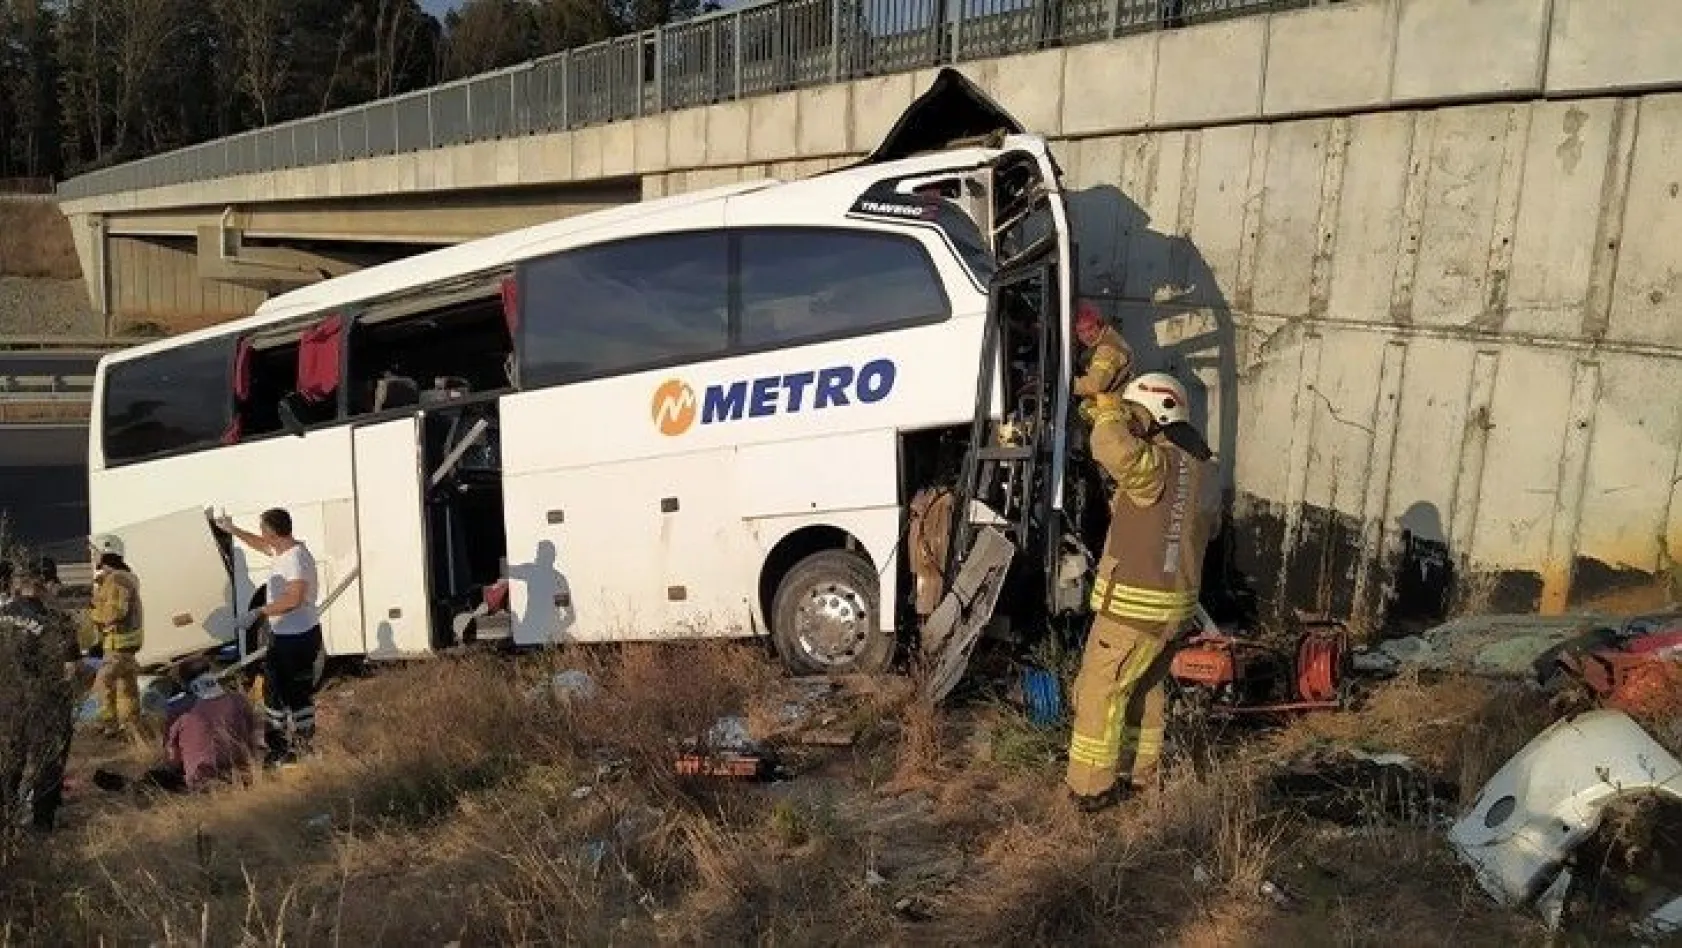 Feci kazada otobüs sürücüsünün uyuduğu iddiası